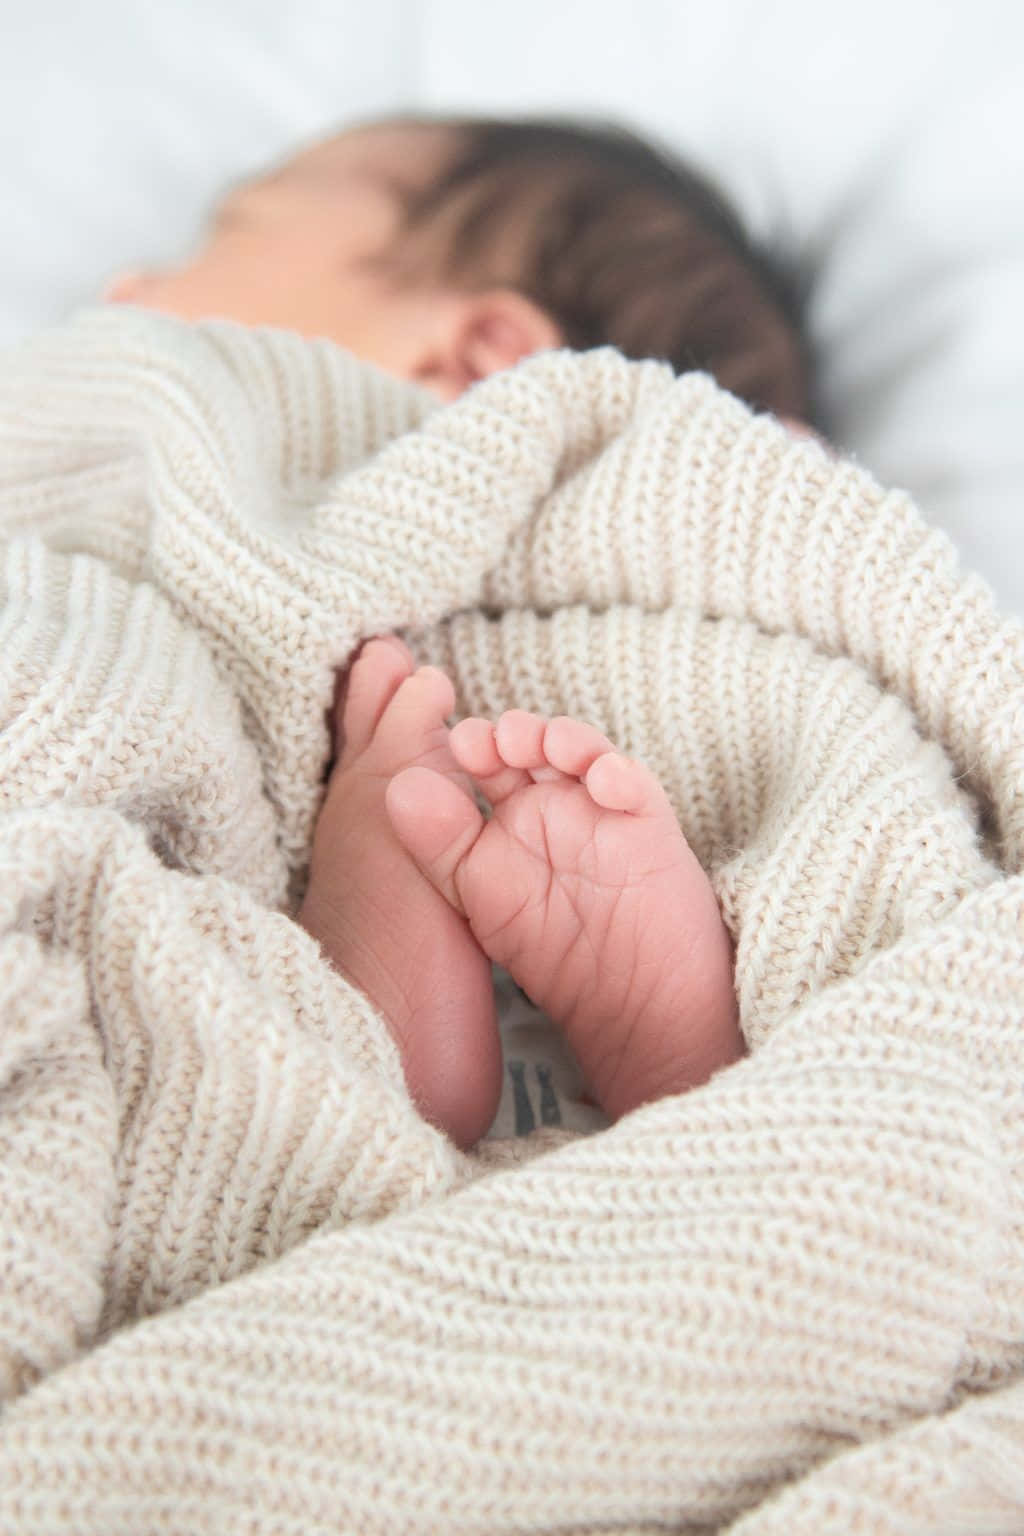 A tender moment as a newborn sleeps peacefully